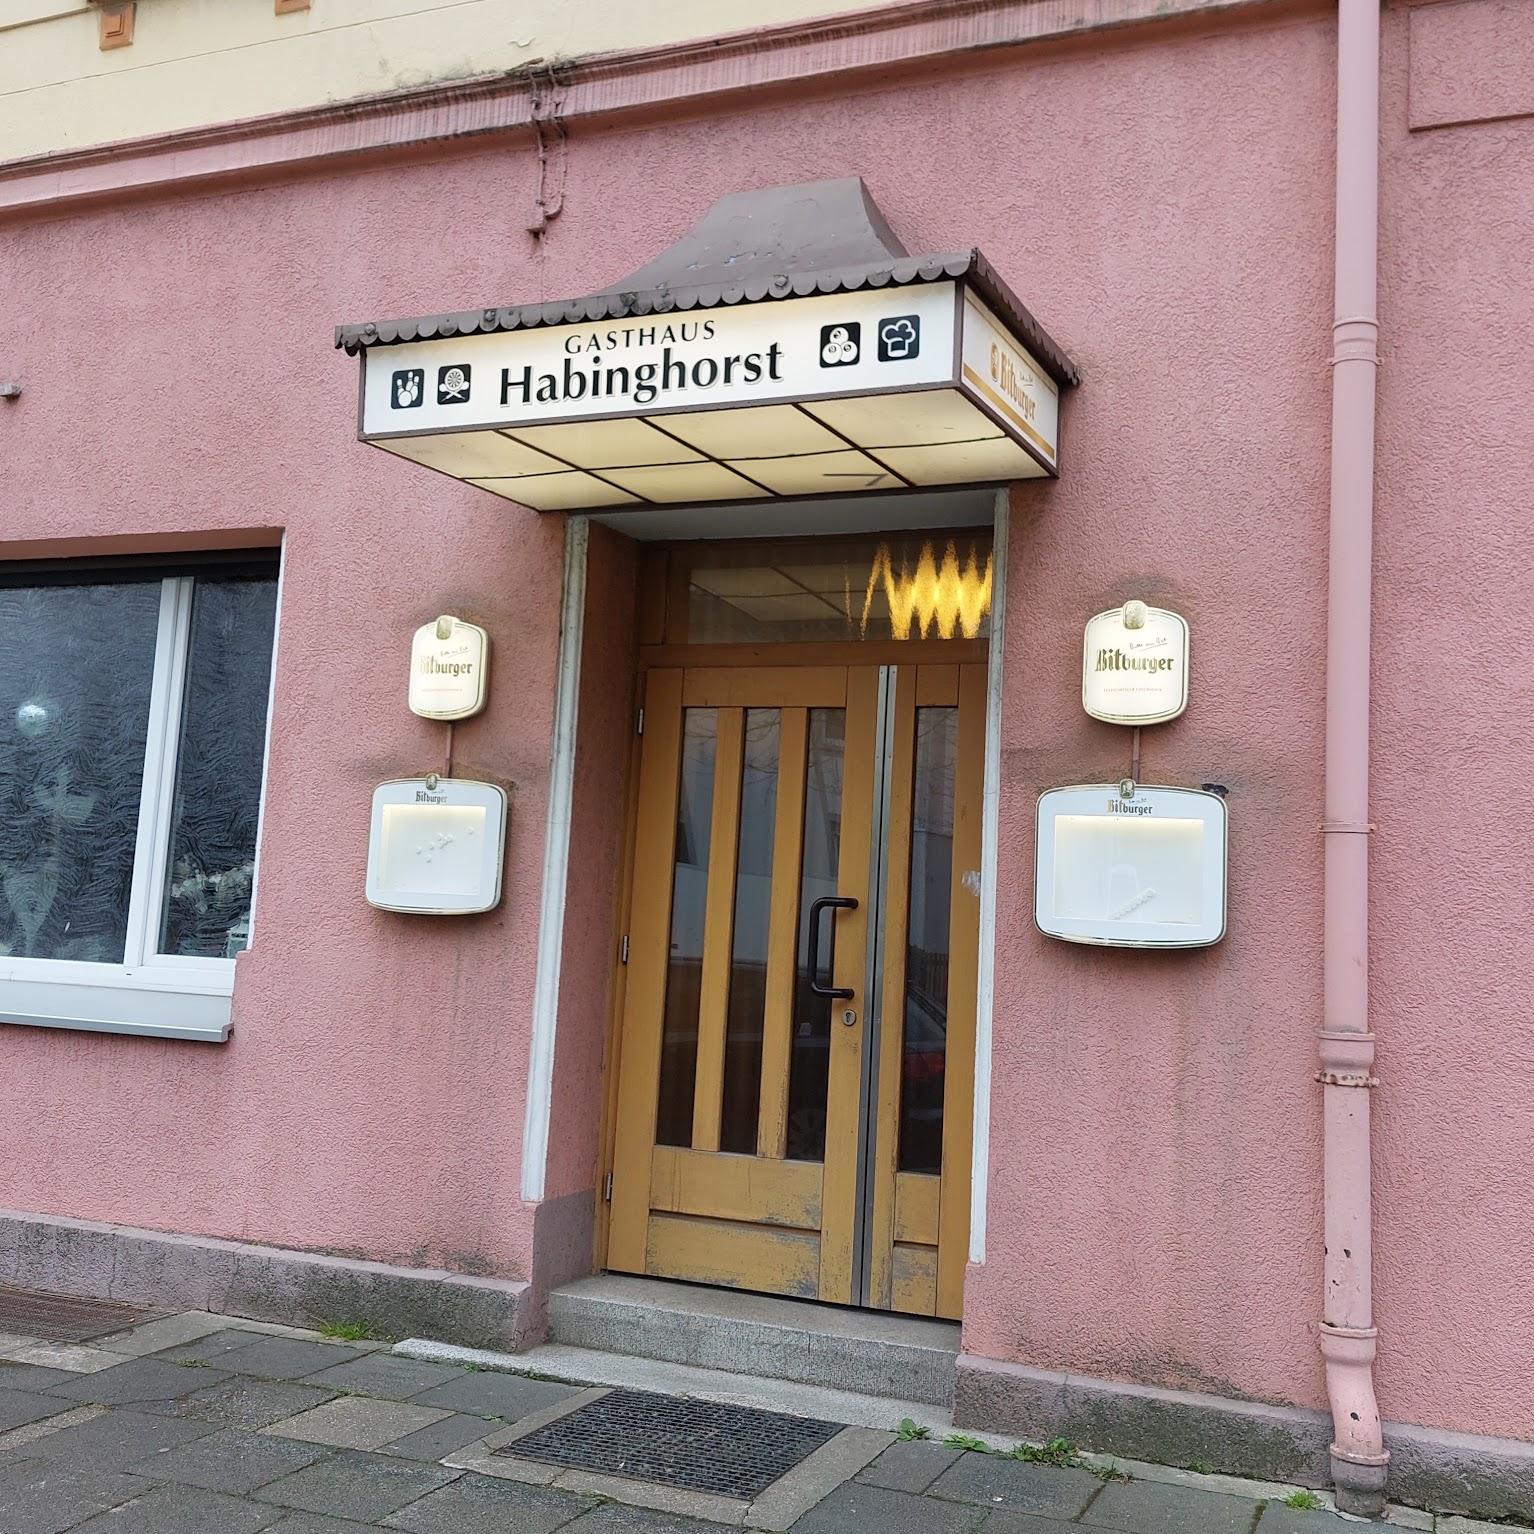 Restaurant "Gasthaus Habinghorst" in Castrop-Rauxel